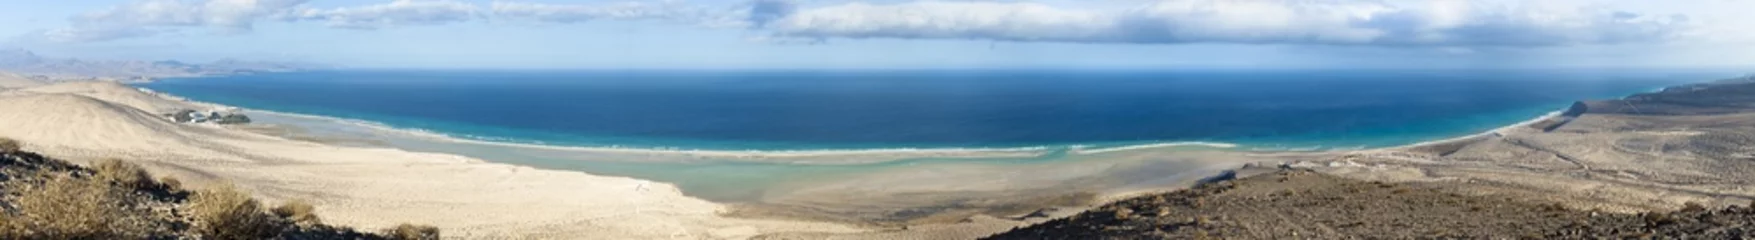 Fotobehang Sotavento Beach, Fuerteventura, Canarische Eilanden Playas De Sotavento, Fuerteventura